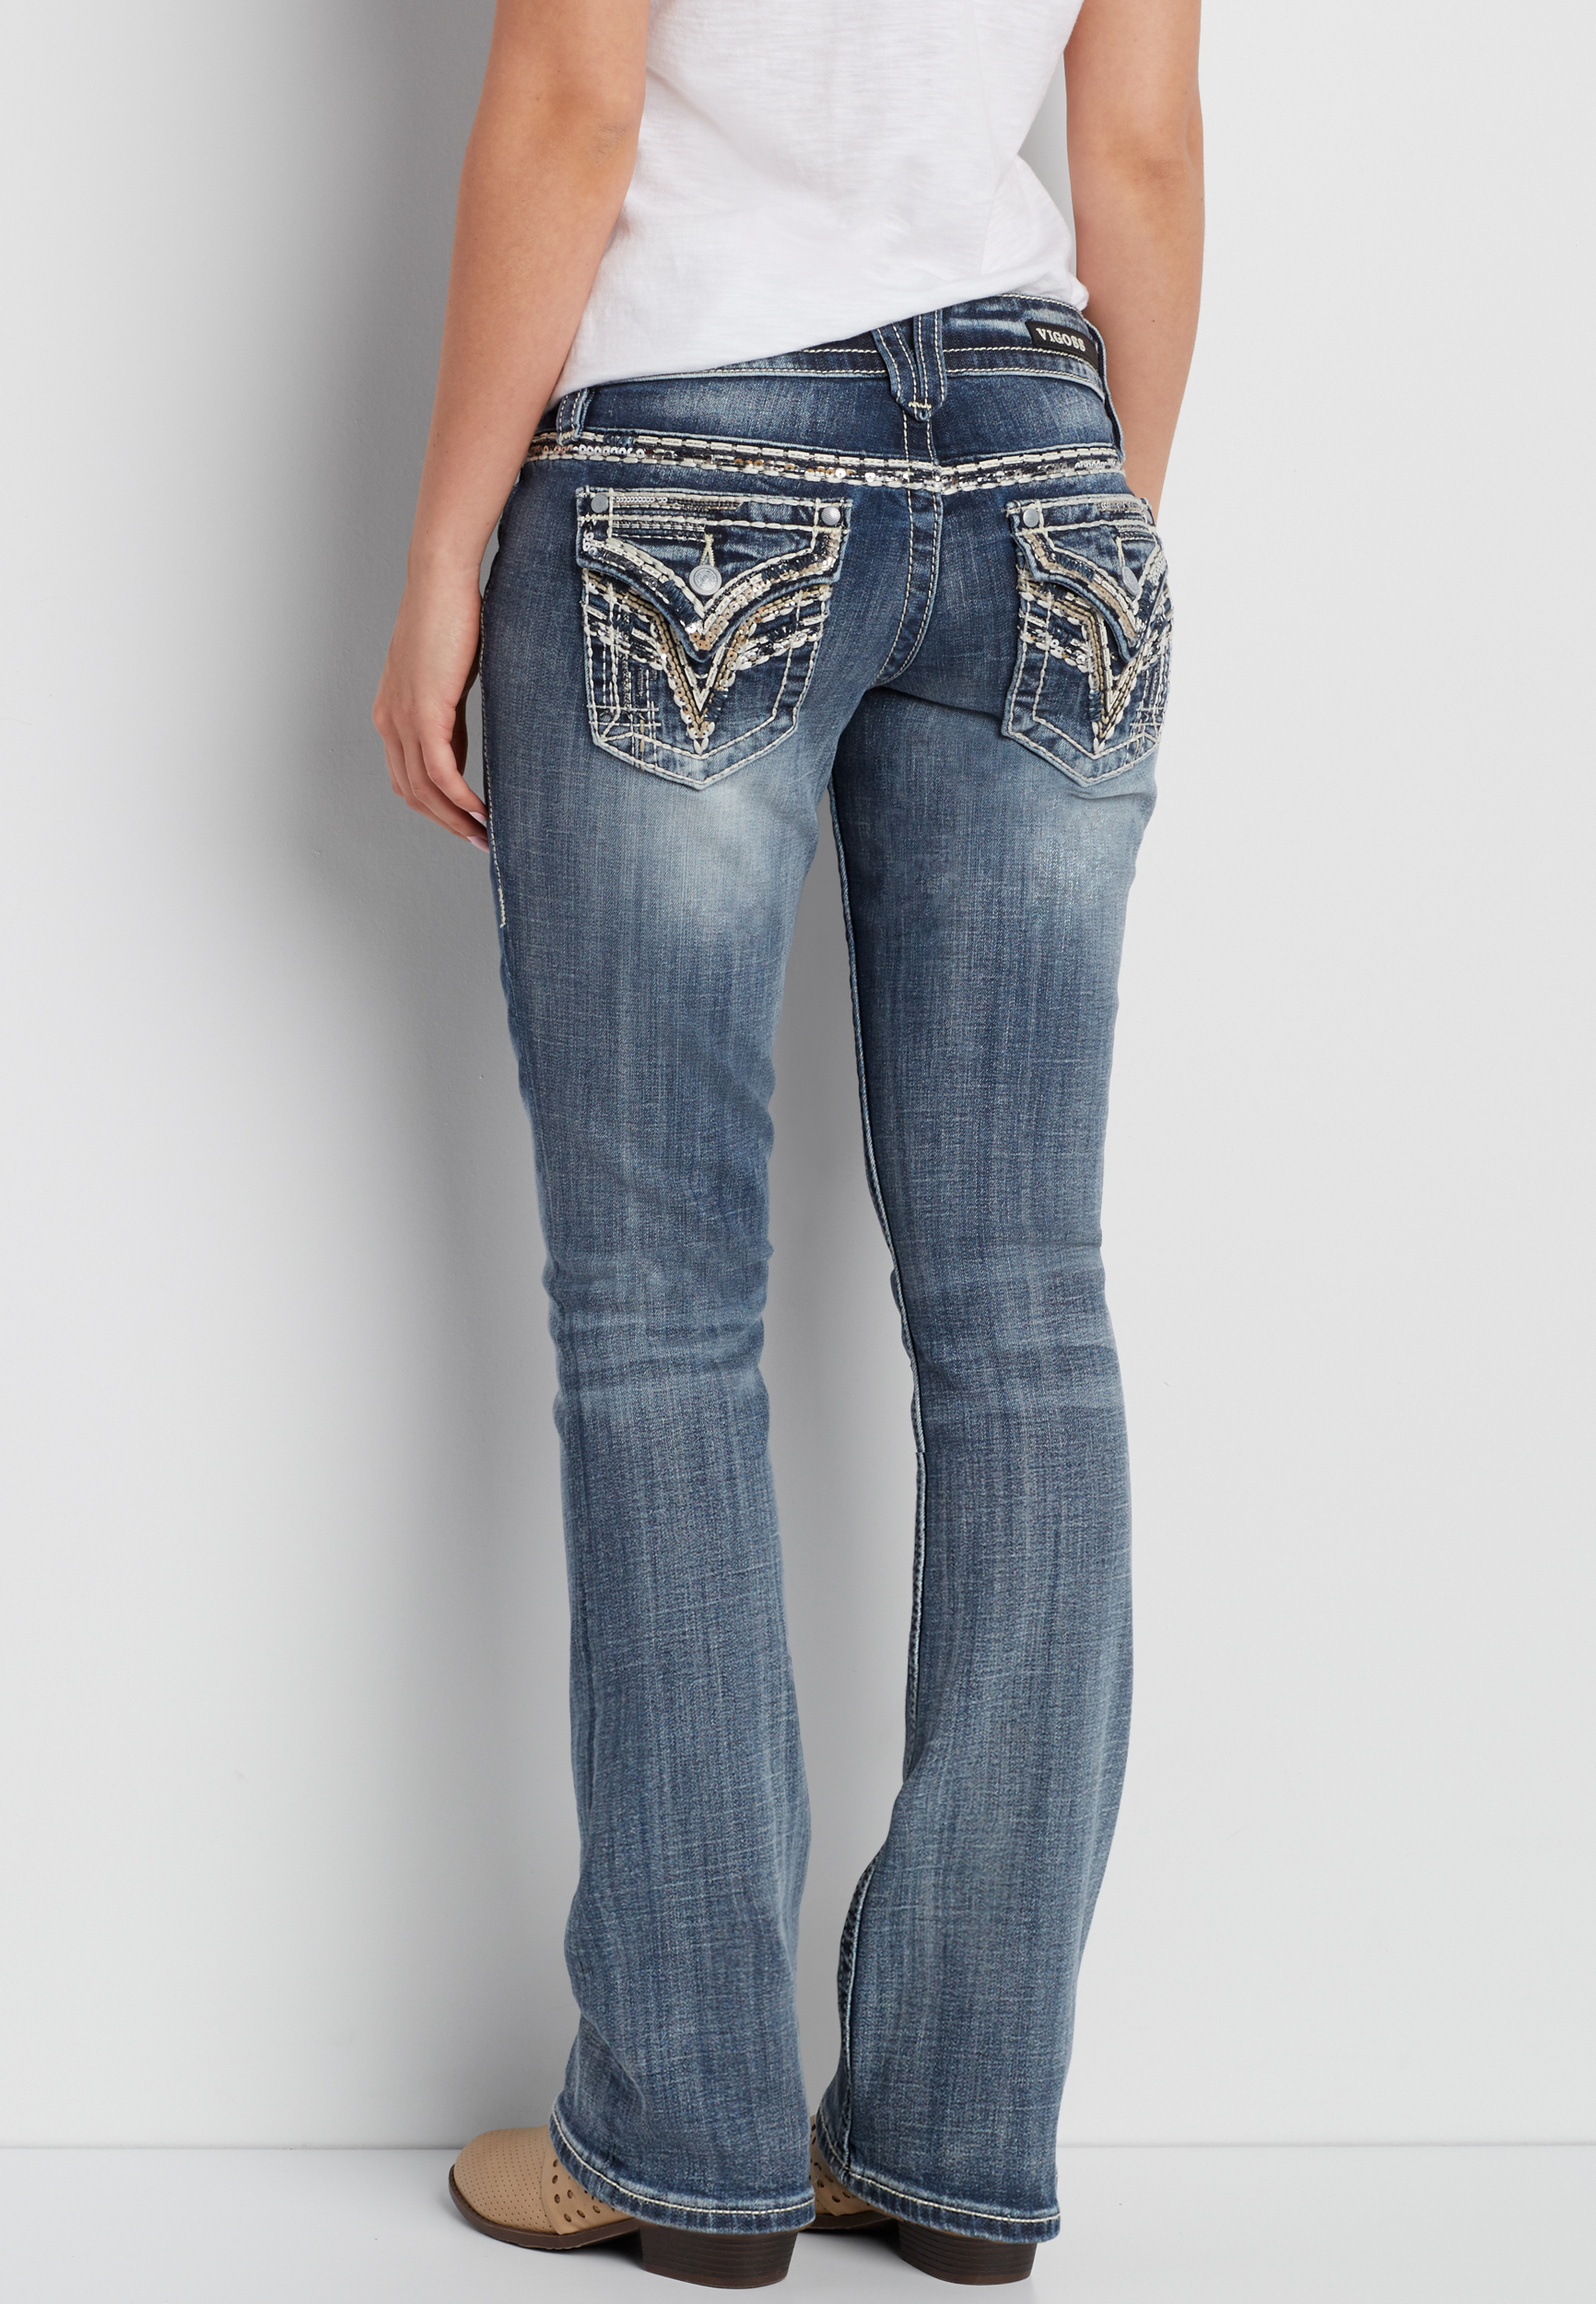 Vigoss® slim boot jeans with sequin embellished back flap pockets ...